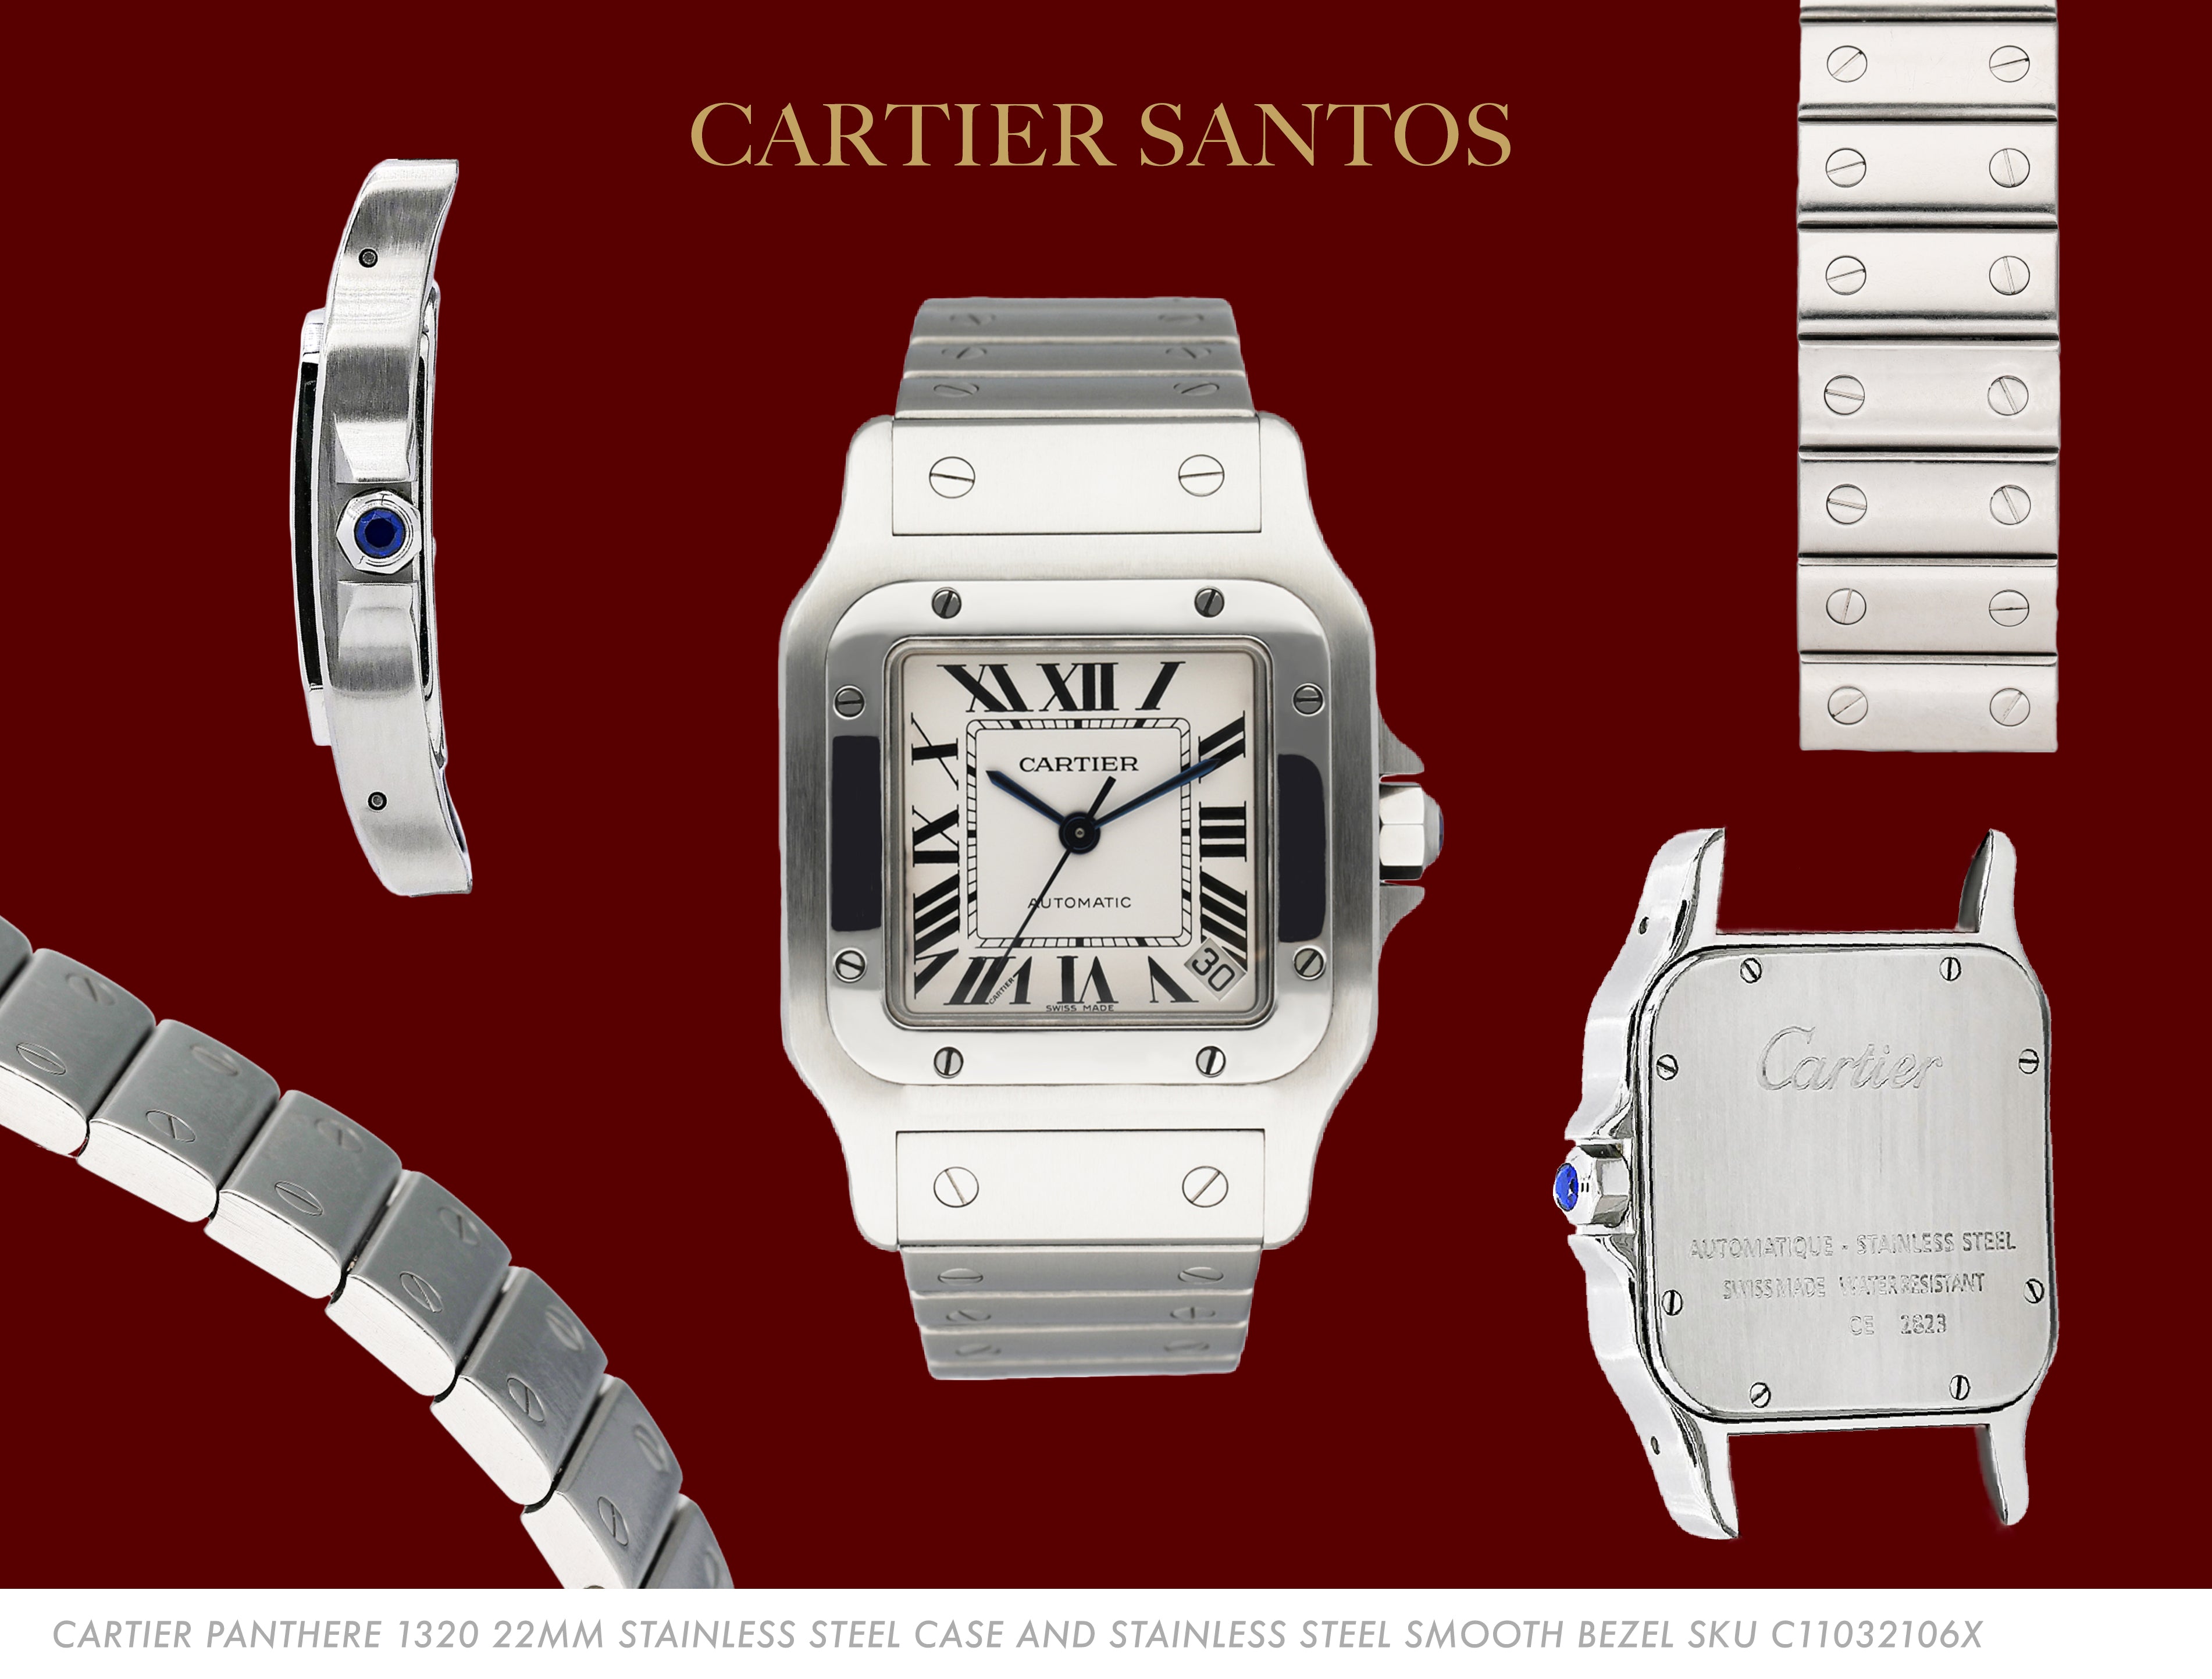 Differences Between A Cartier Santos And Cartier Tank